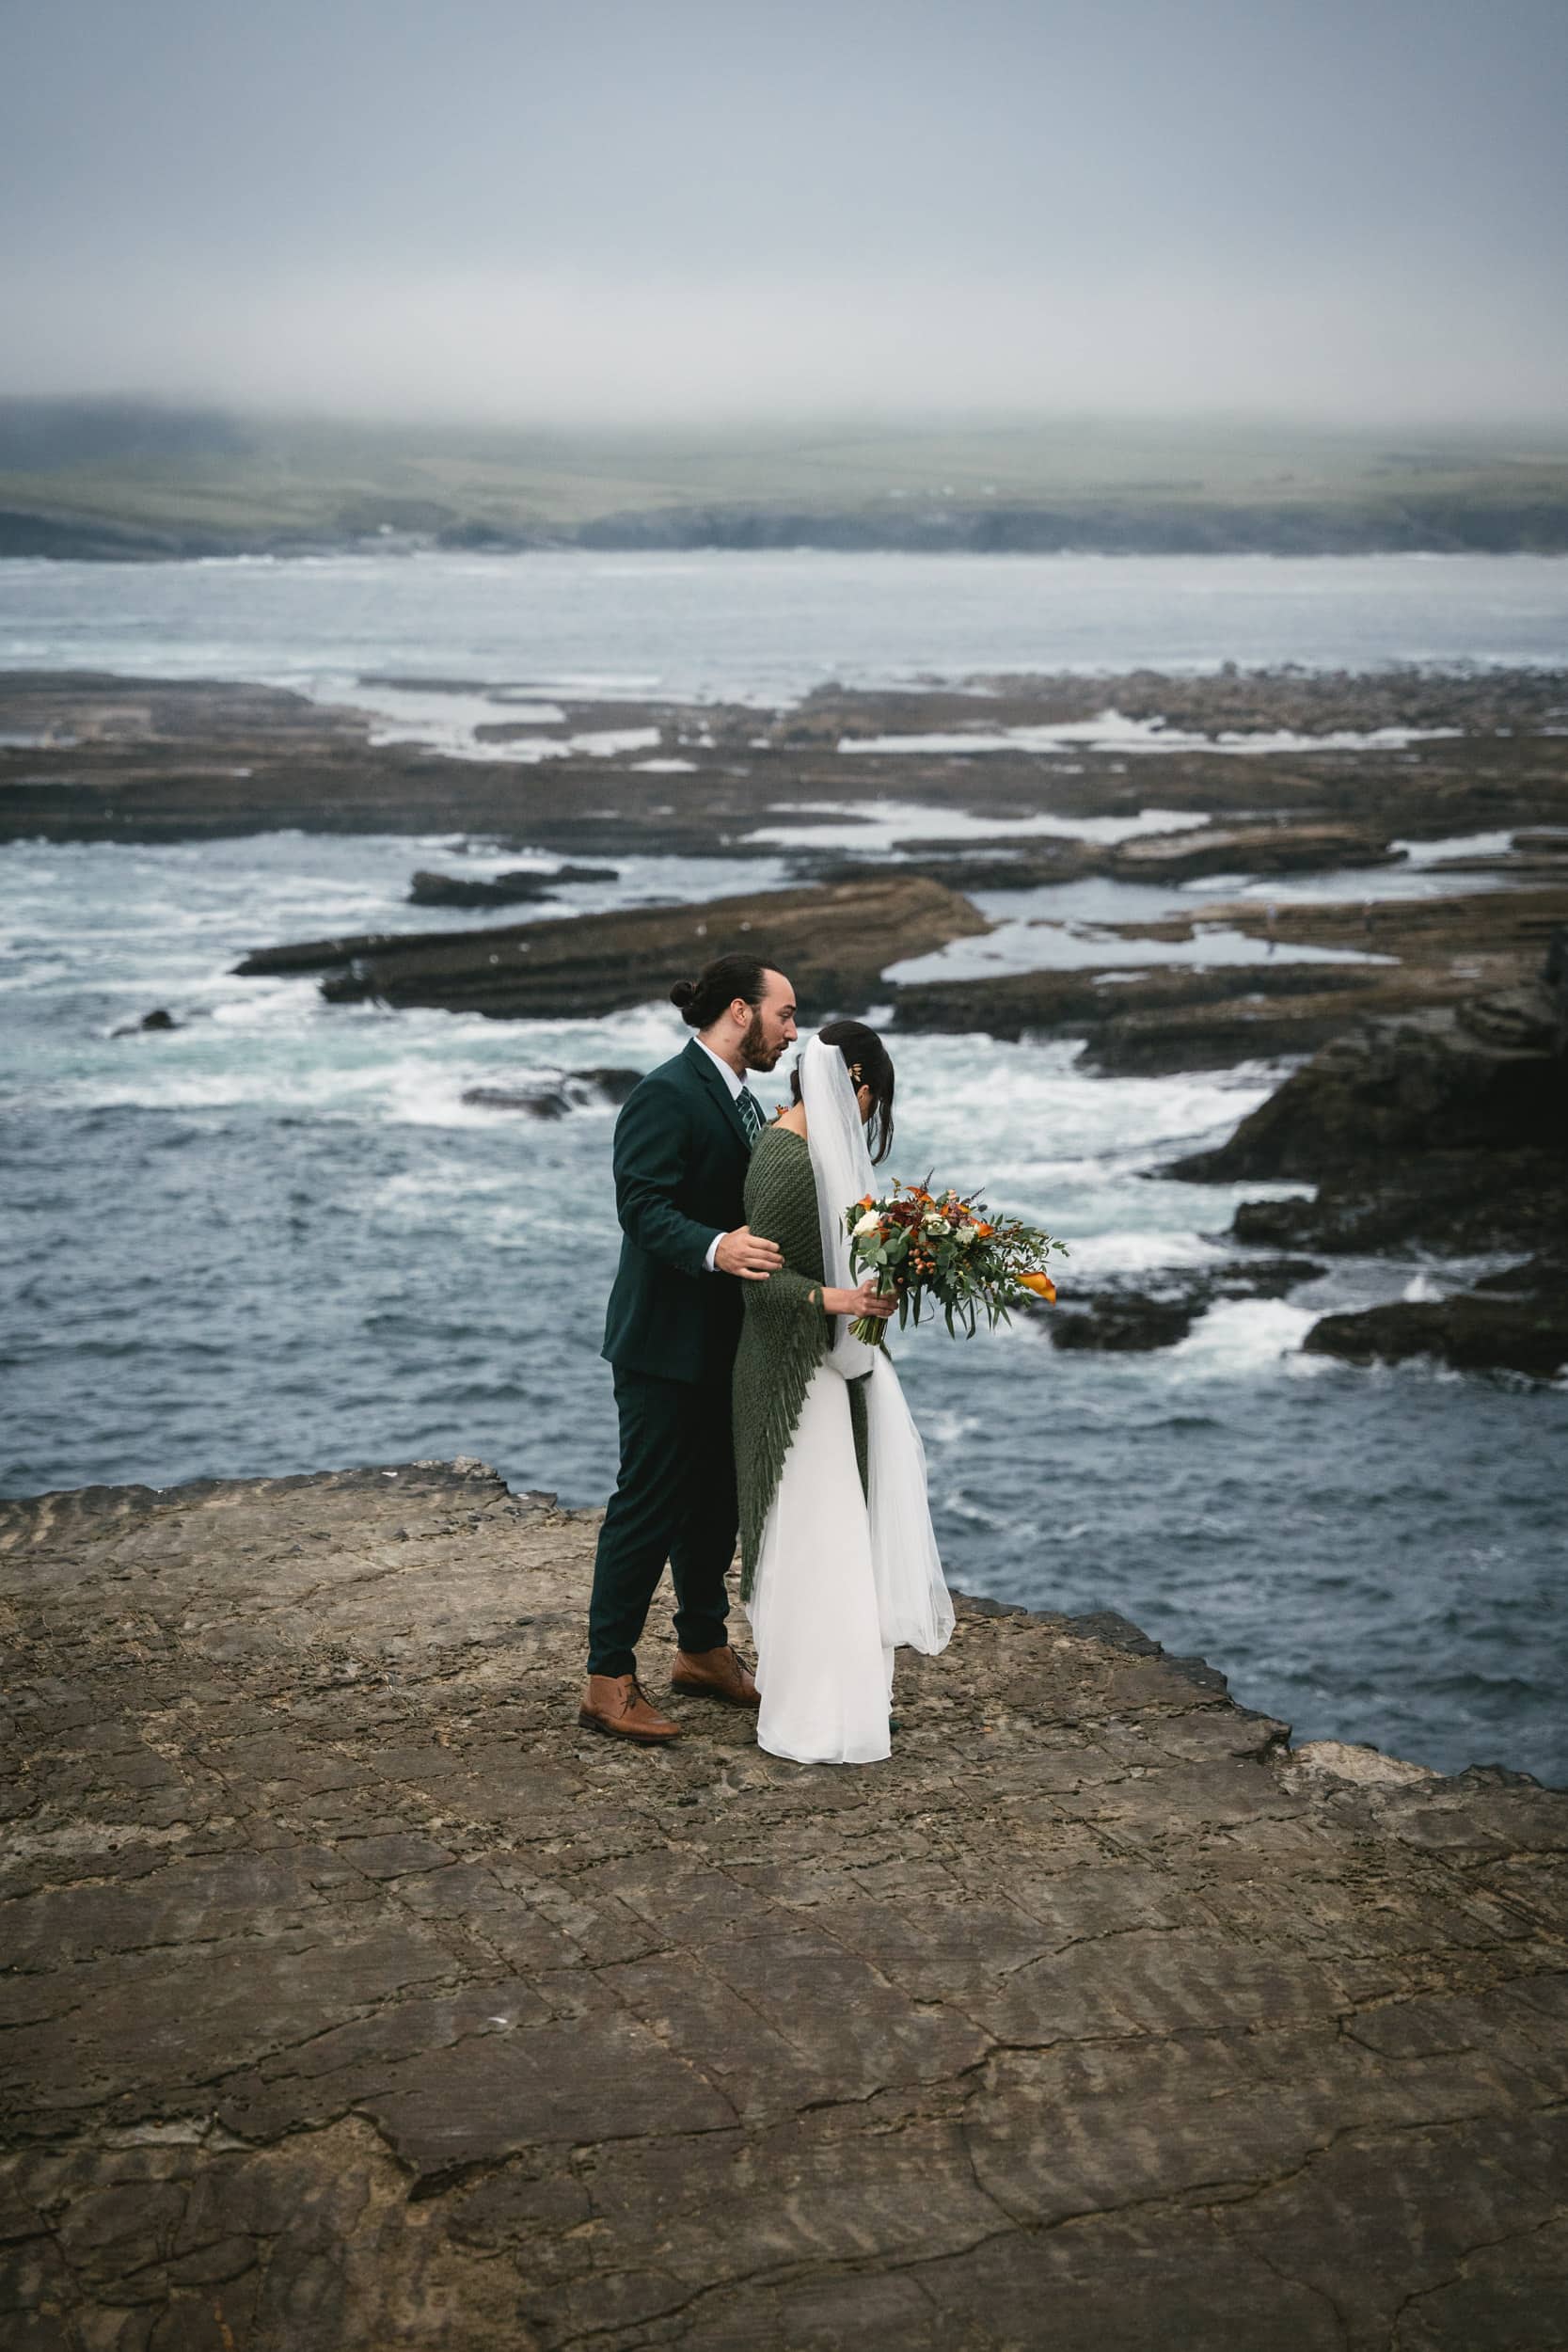 A clifftop embrace during their Irish elopement.